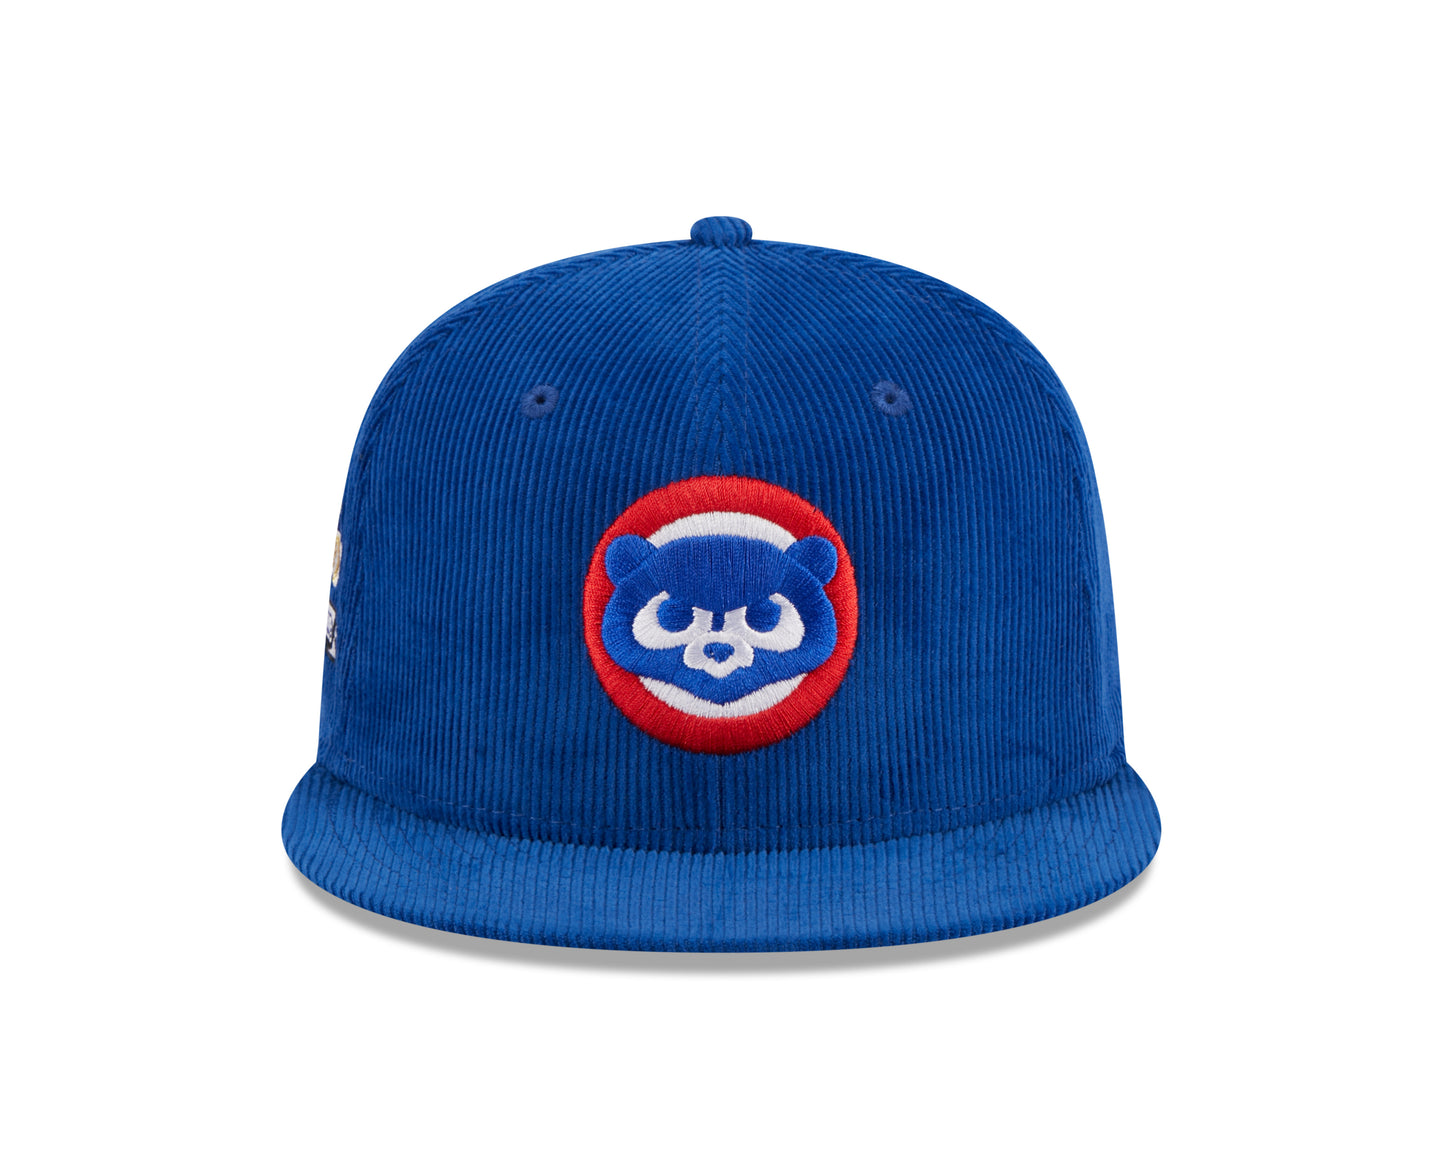 New Era - Chicago Cubs Throwback Cord - Blue - Headz Up 